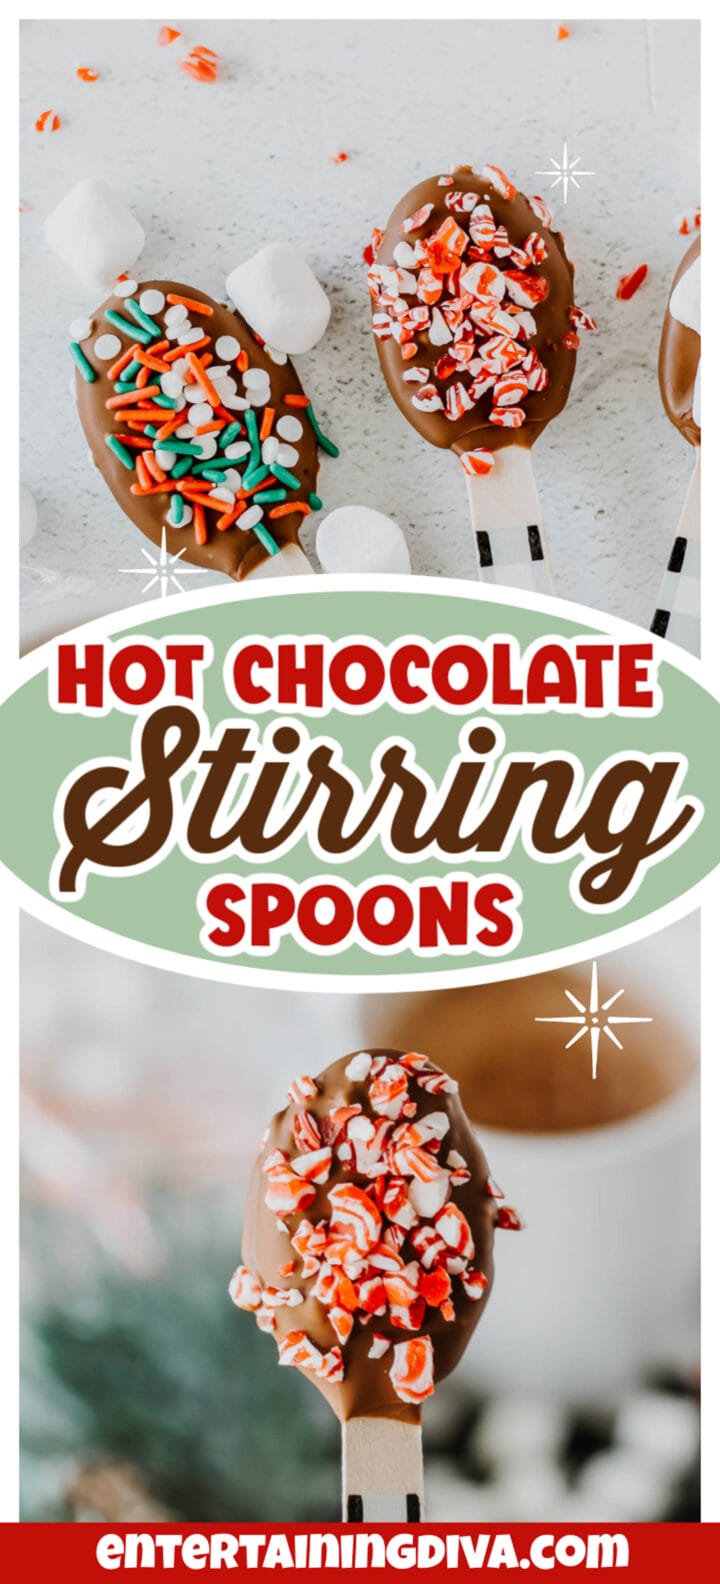 DIY Hot Chocolate Stirring Spoons